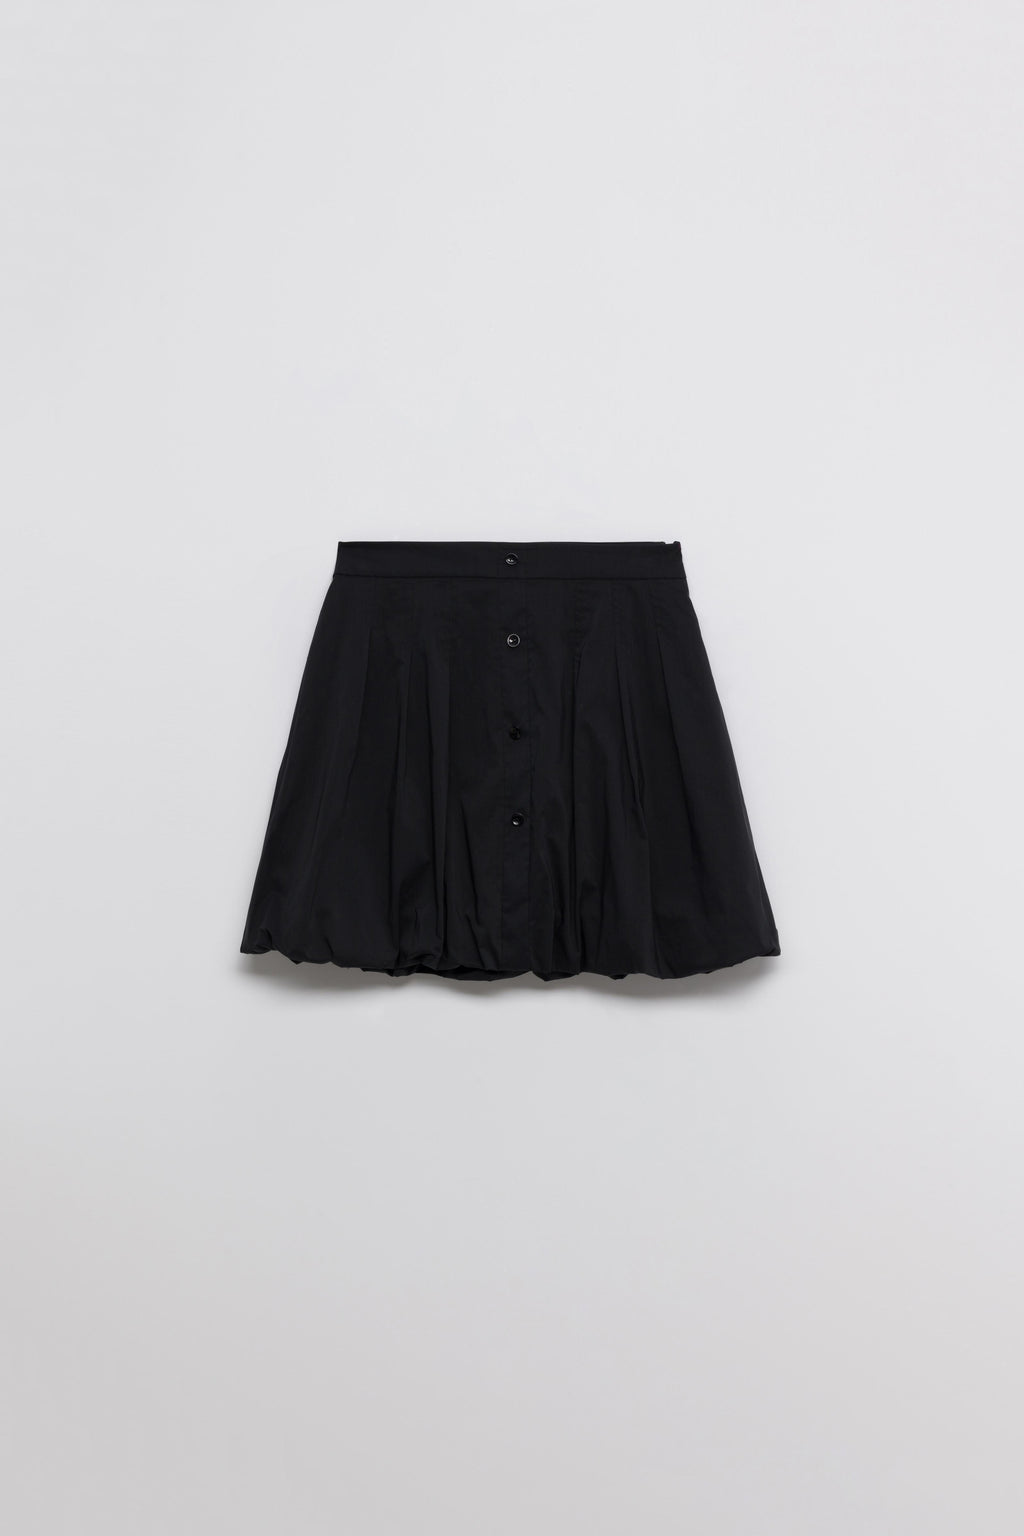 Smyth Bubble Skirt